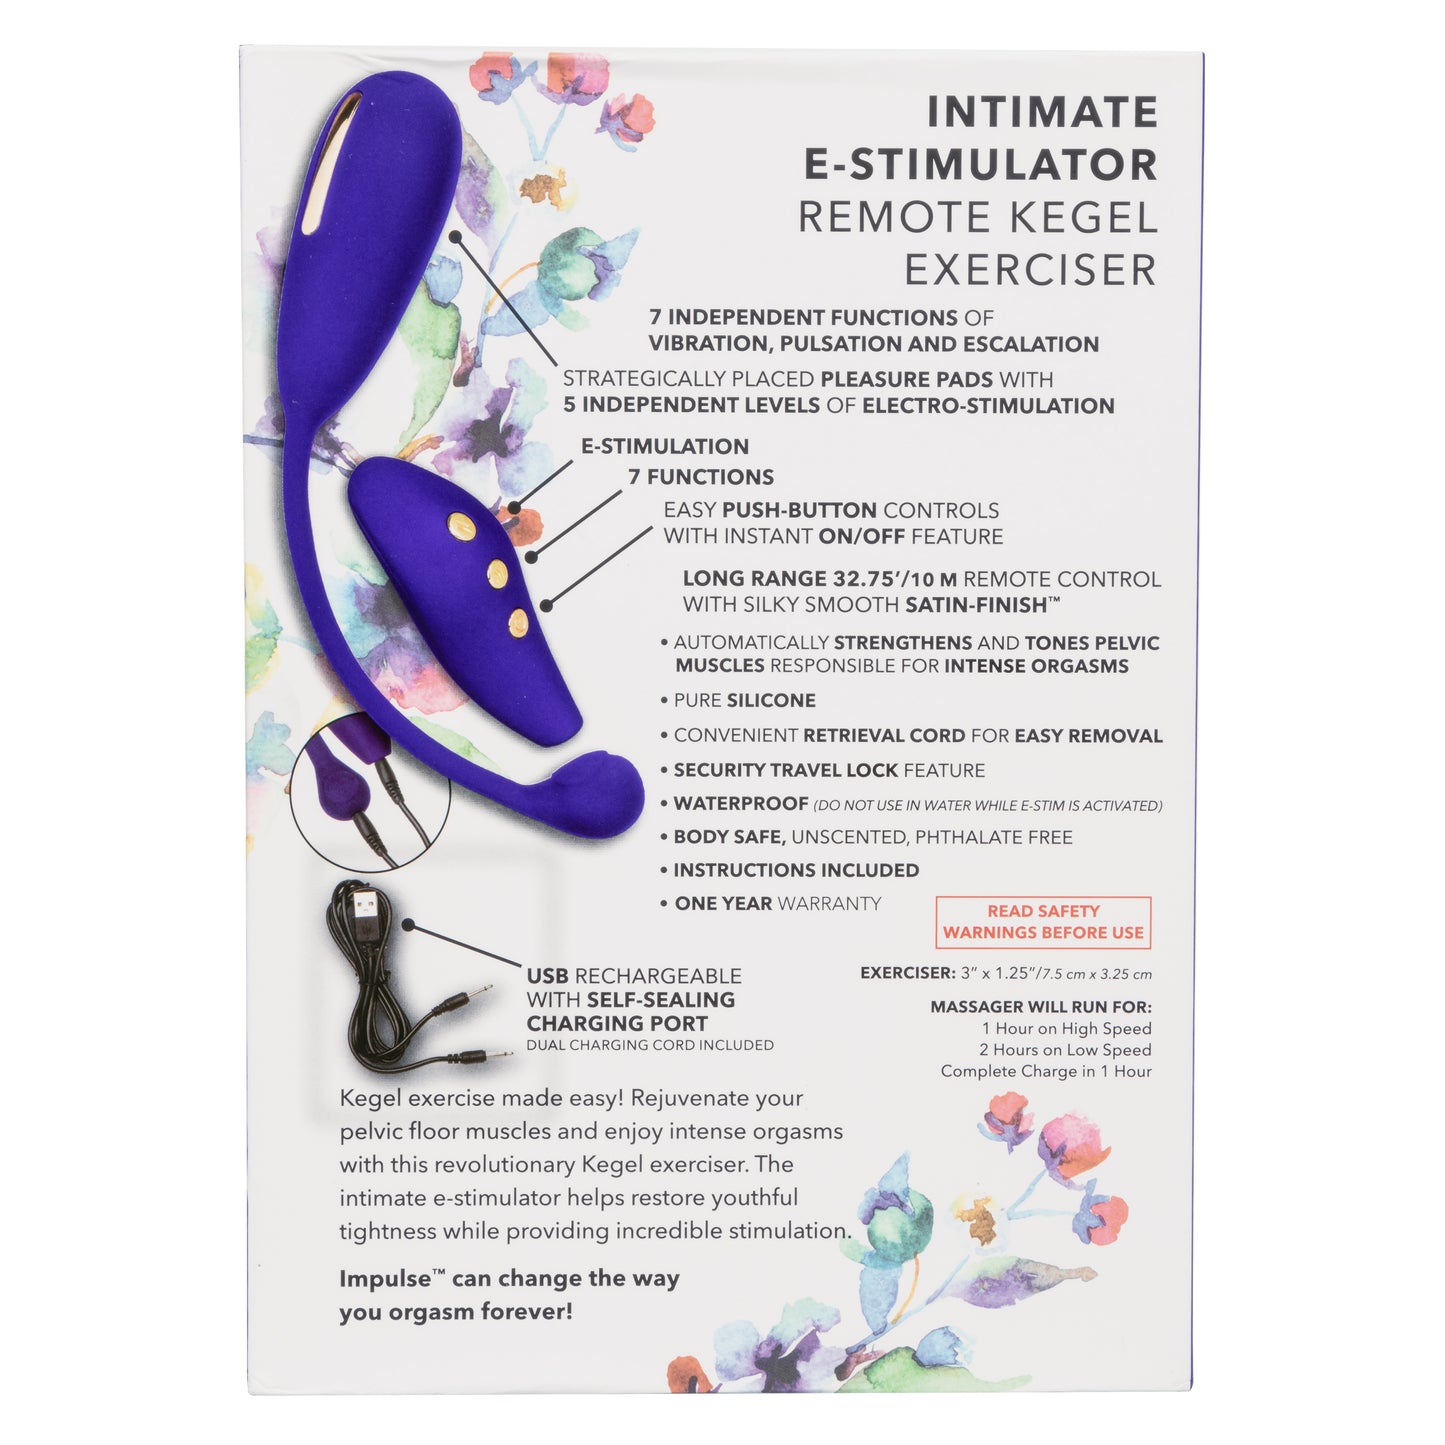 Impulse™ Intimate E-Stimulator Remote Kegel Exerciser